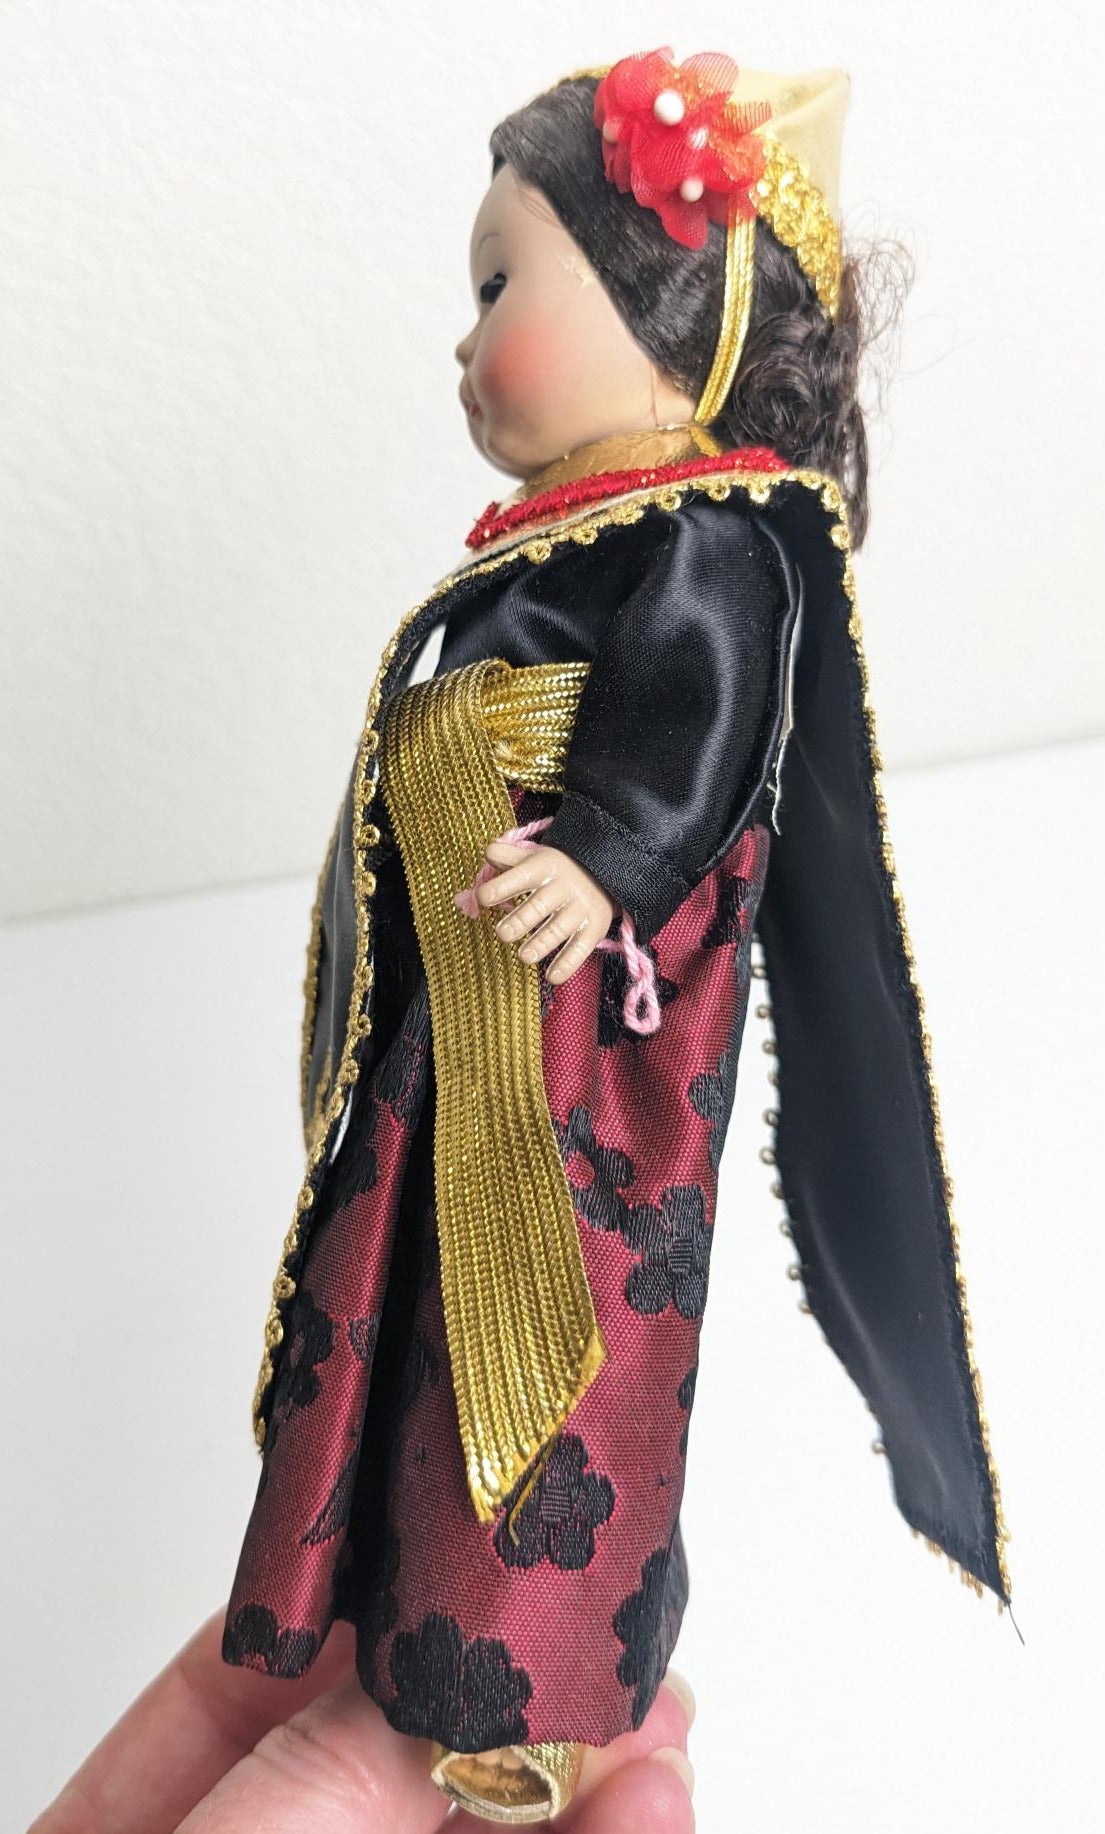 Madame Alexander 'Indonesia' Vintage Doll